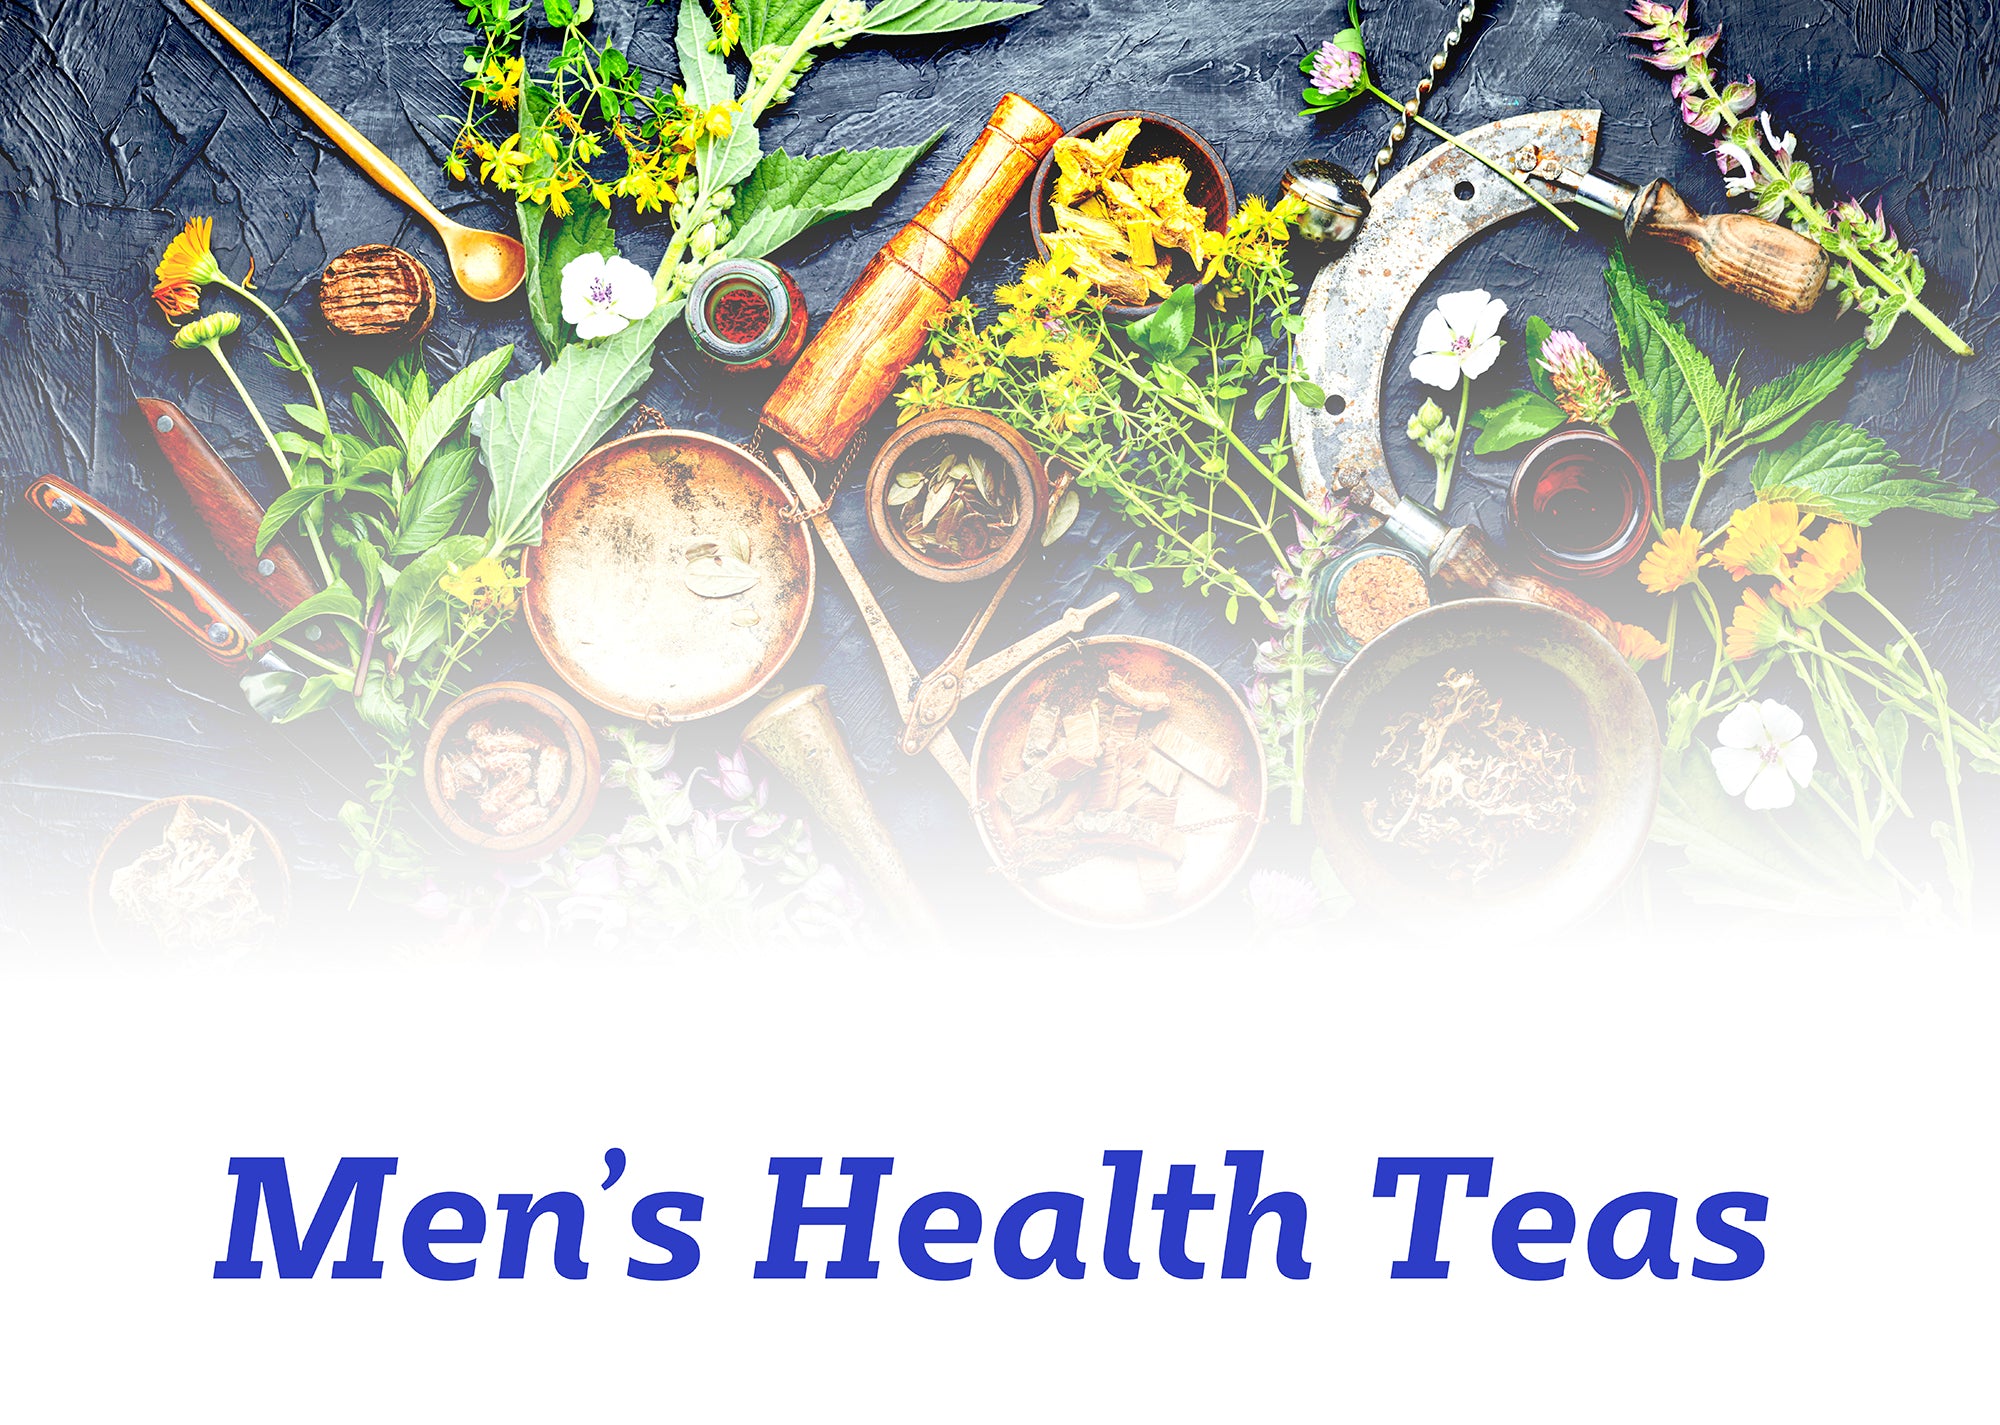 Men's Health Teas